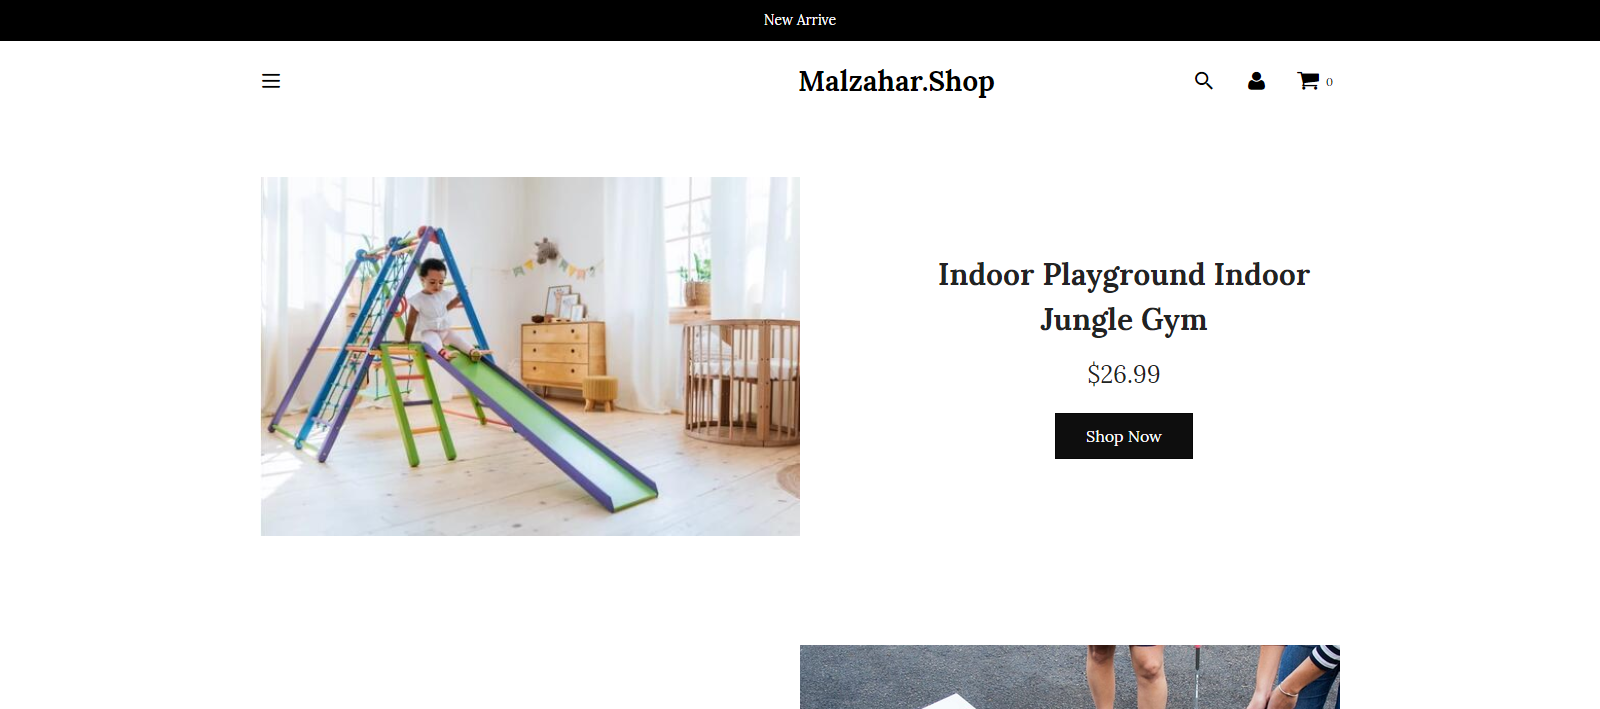 Malzahar shop homepage image